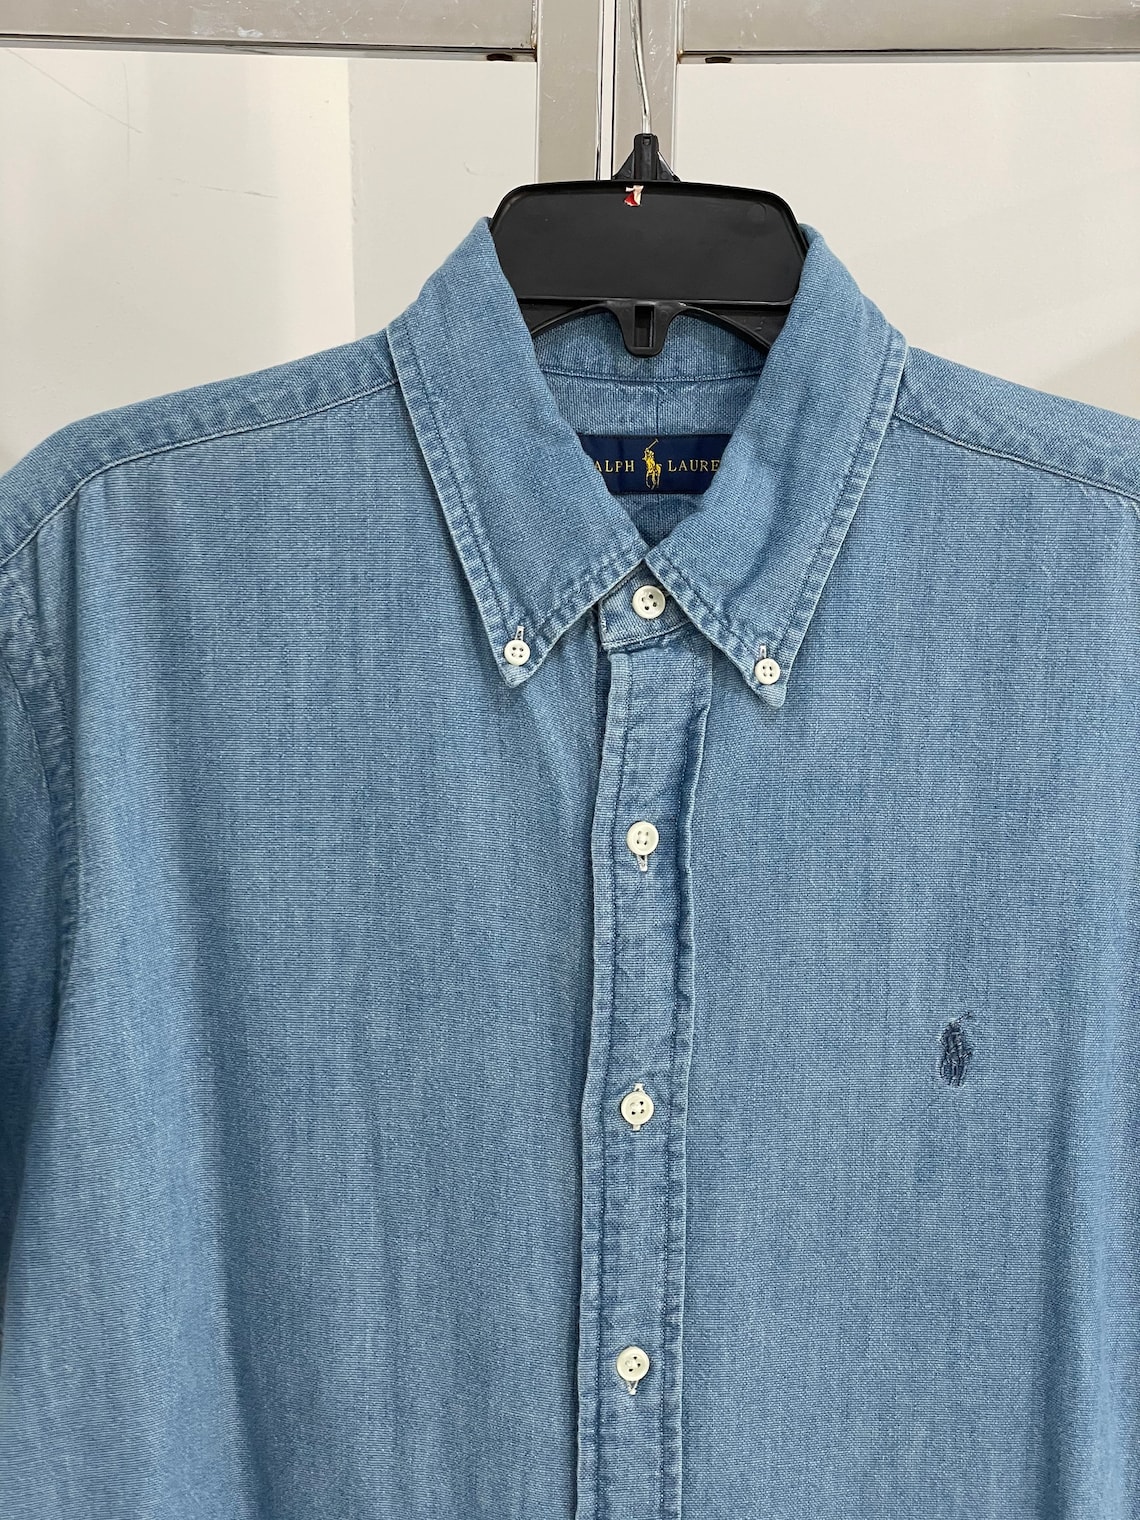 Vintage Ralph Lauren denim shirt / L | Etsy